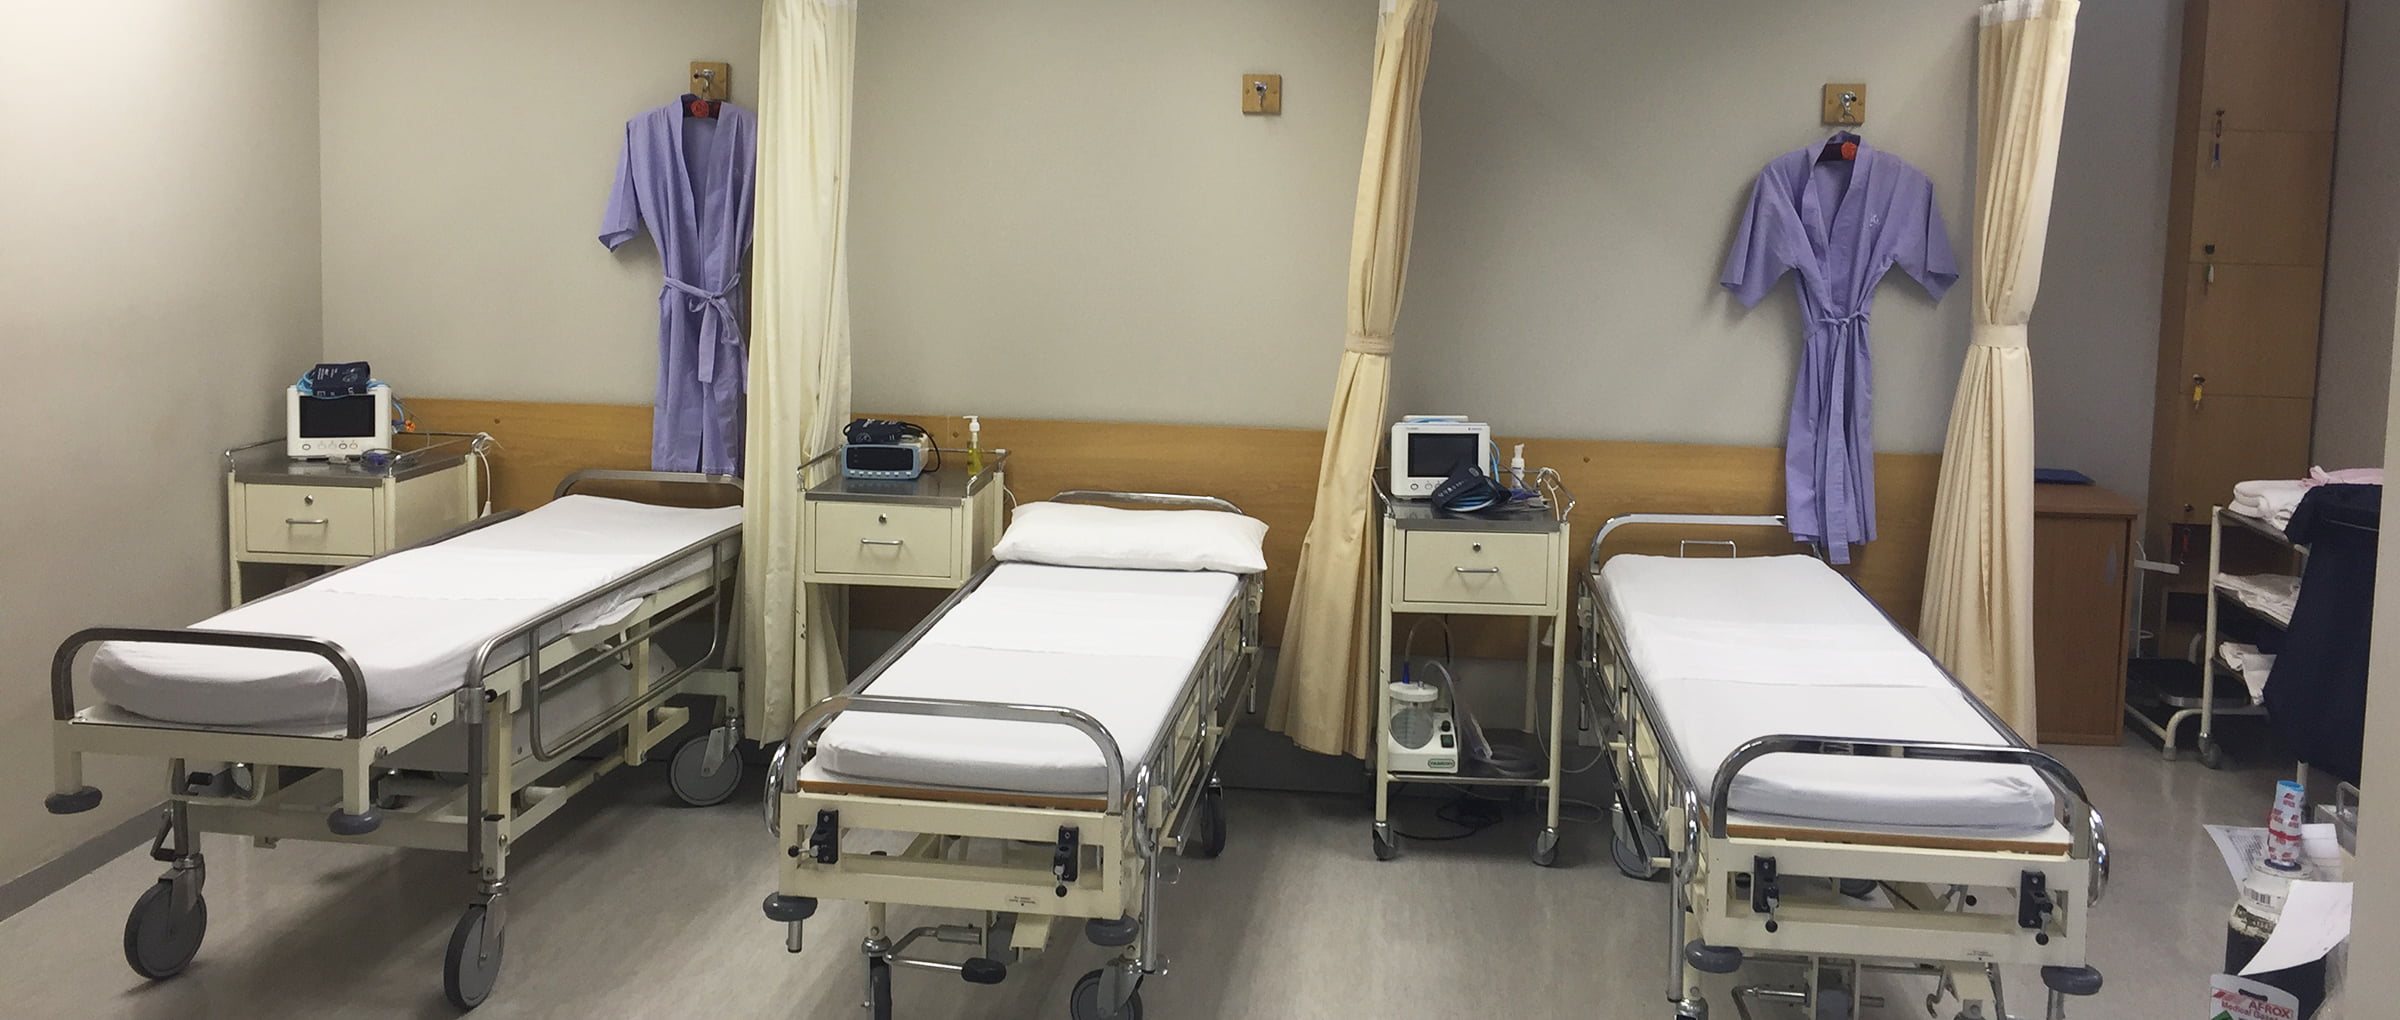 Cape Fertility Clinic recovery area